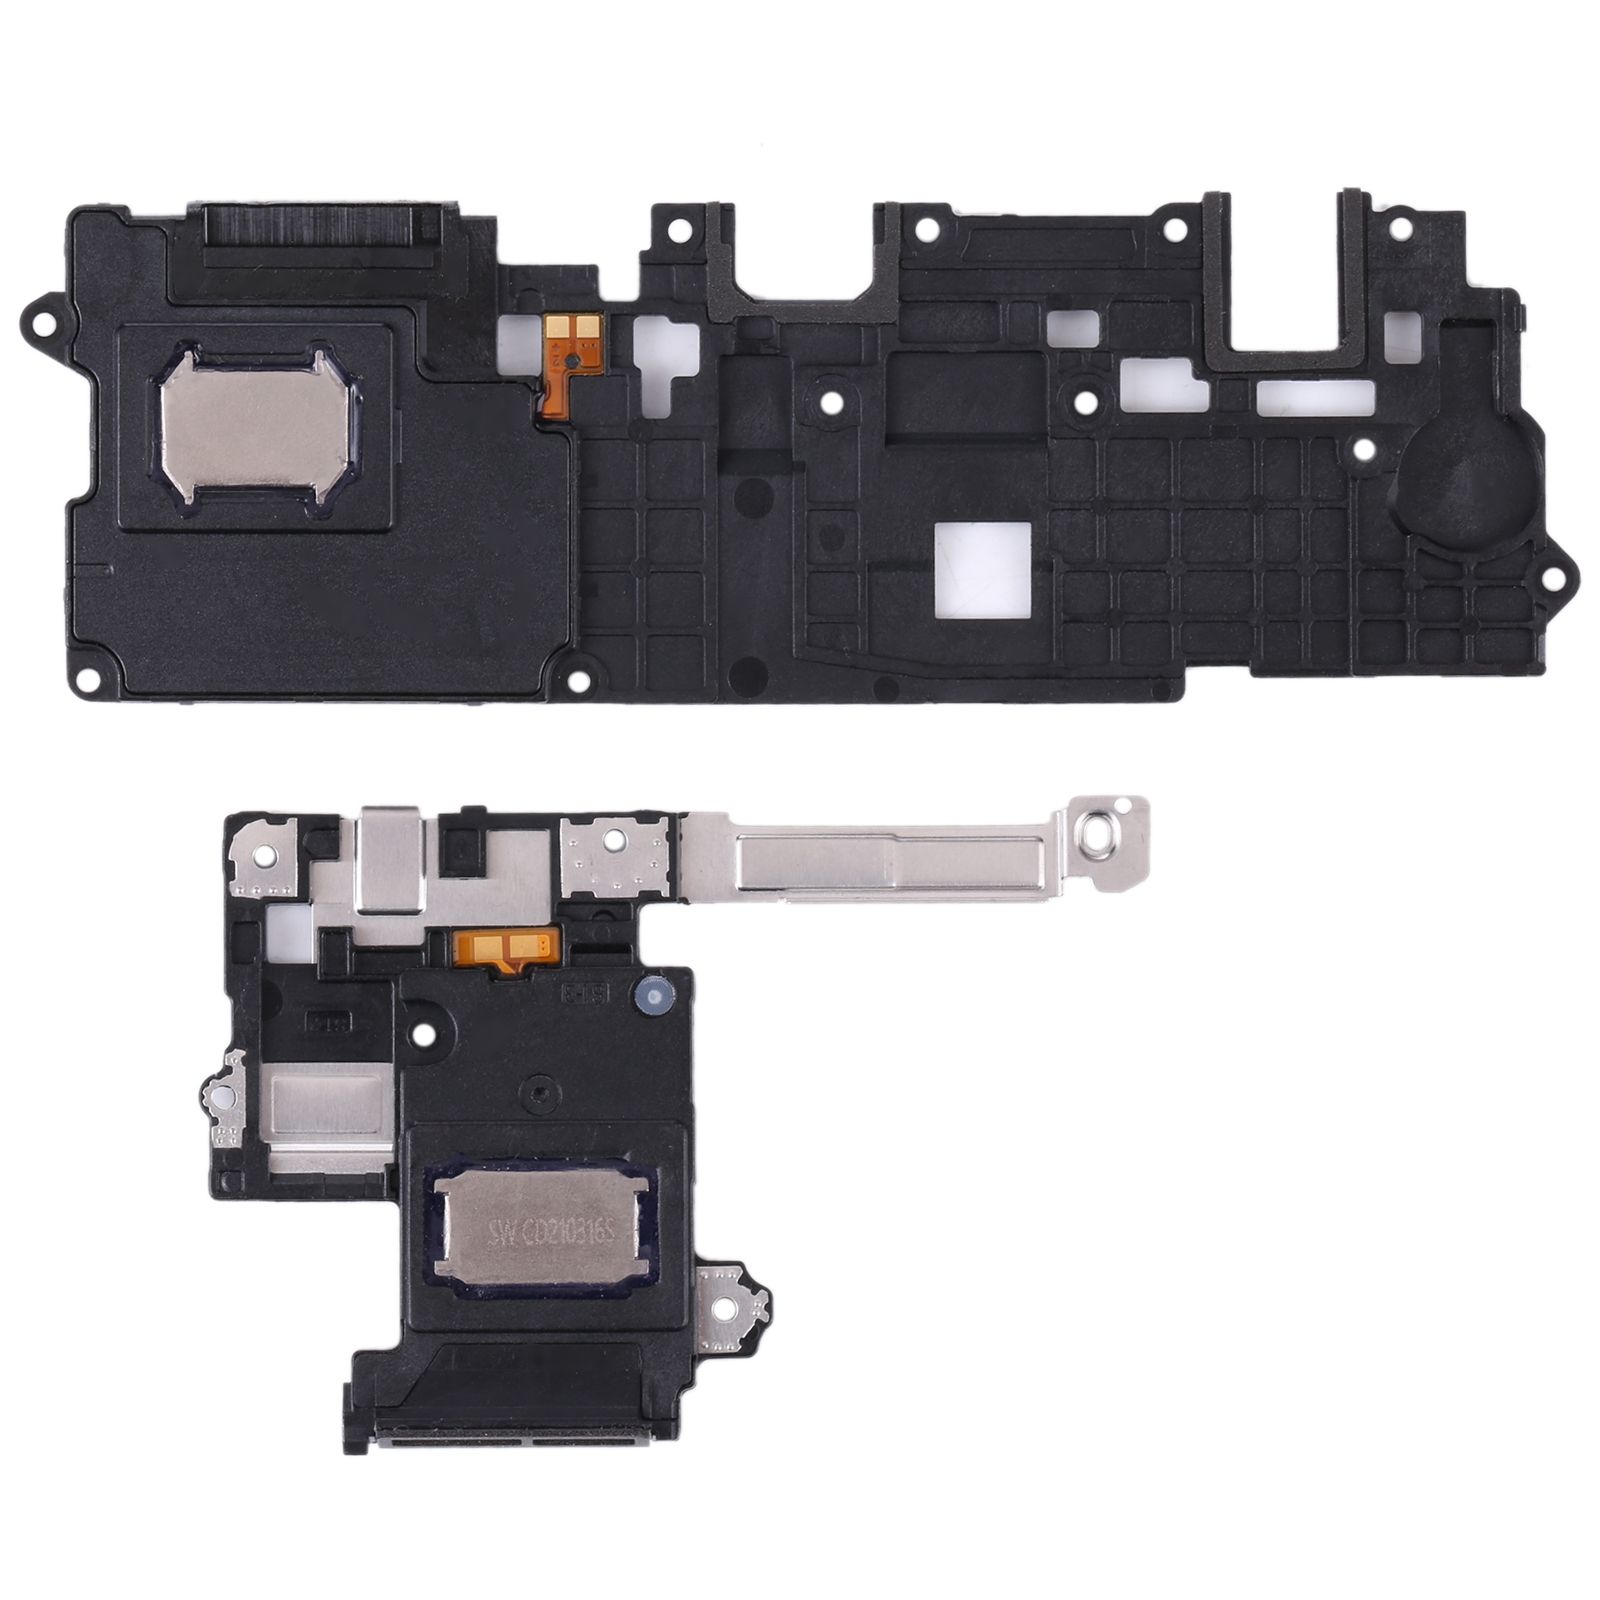  1 Cặp Loa Ringer Buzzer cho Samsung Galaxy Tab A7 Lite SM-T225 